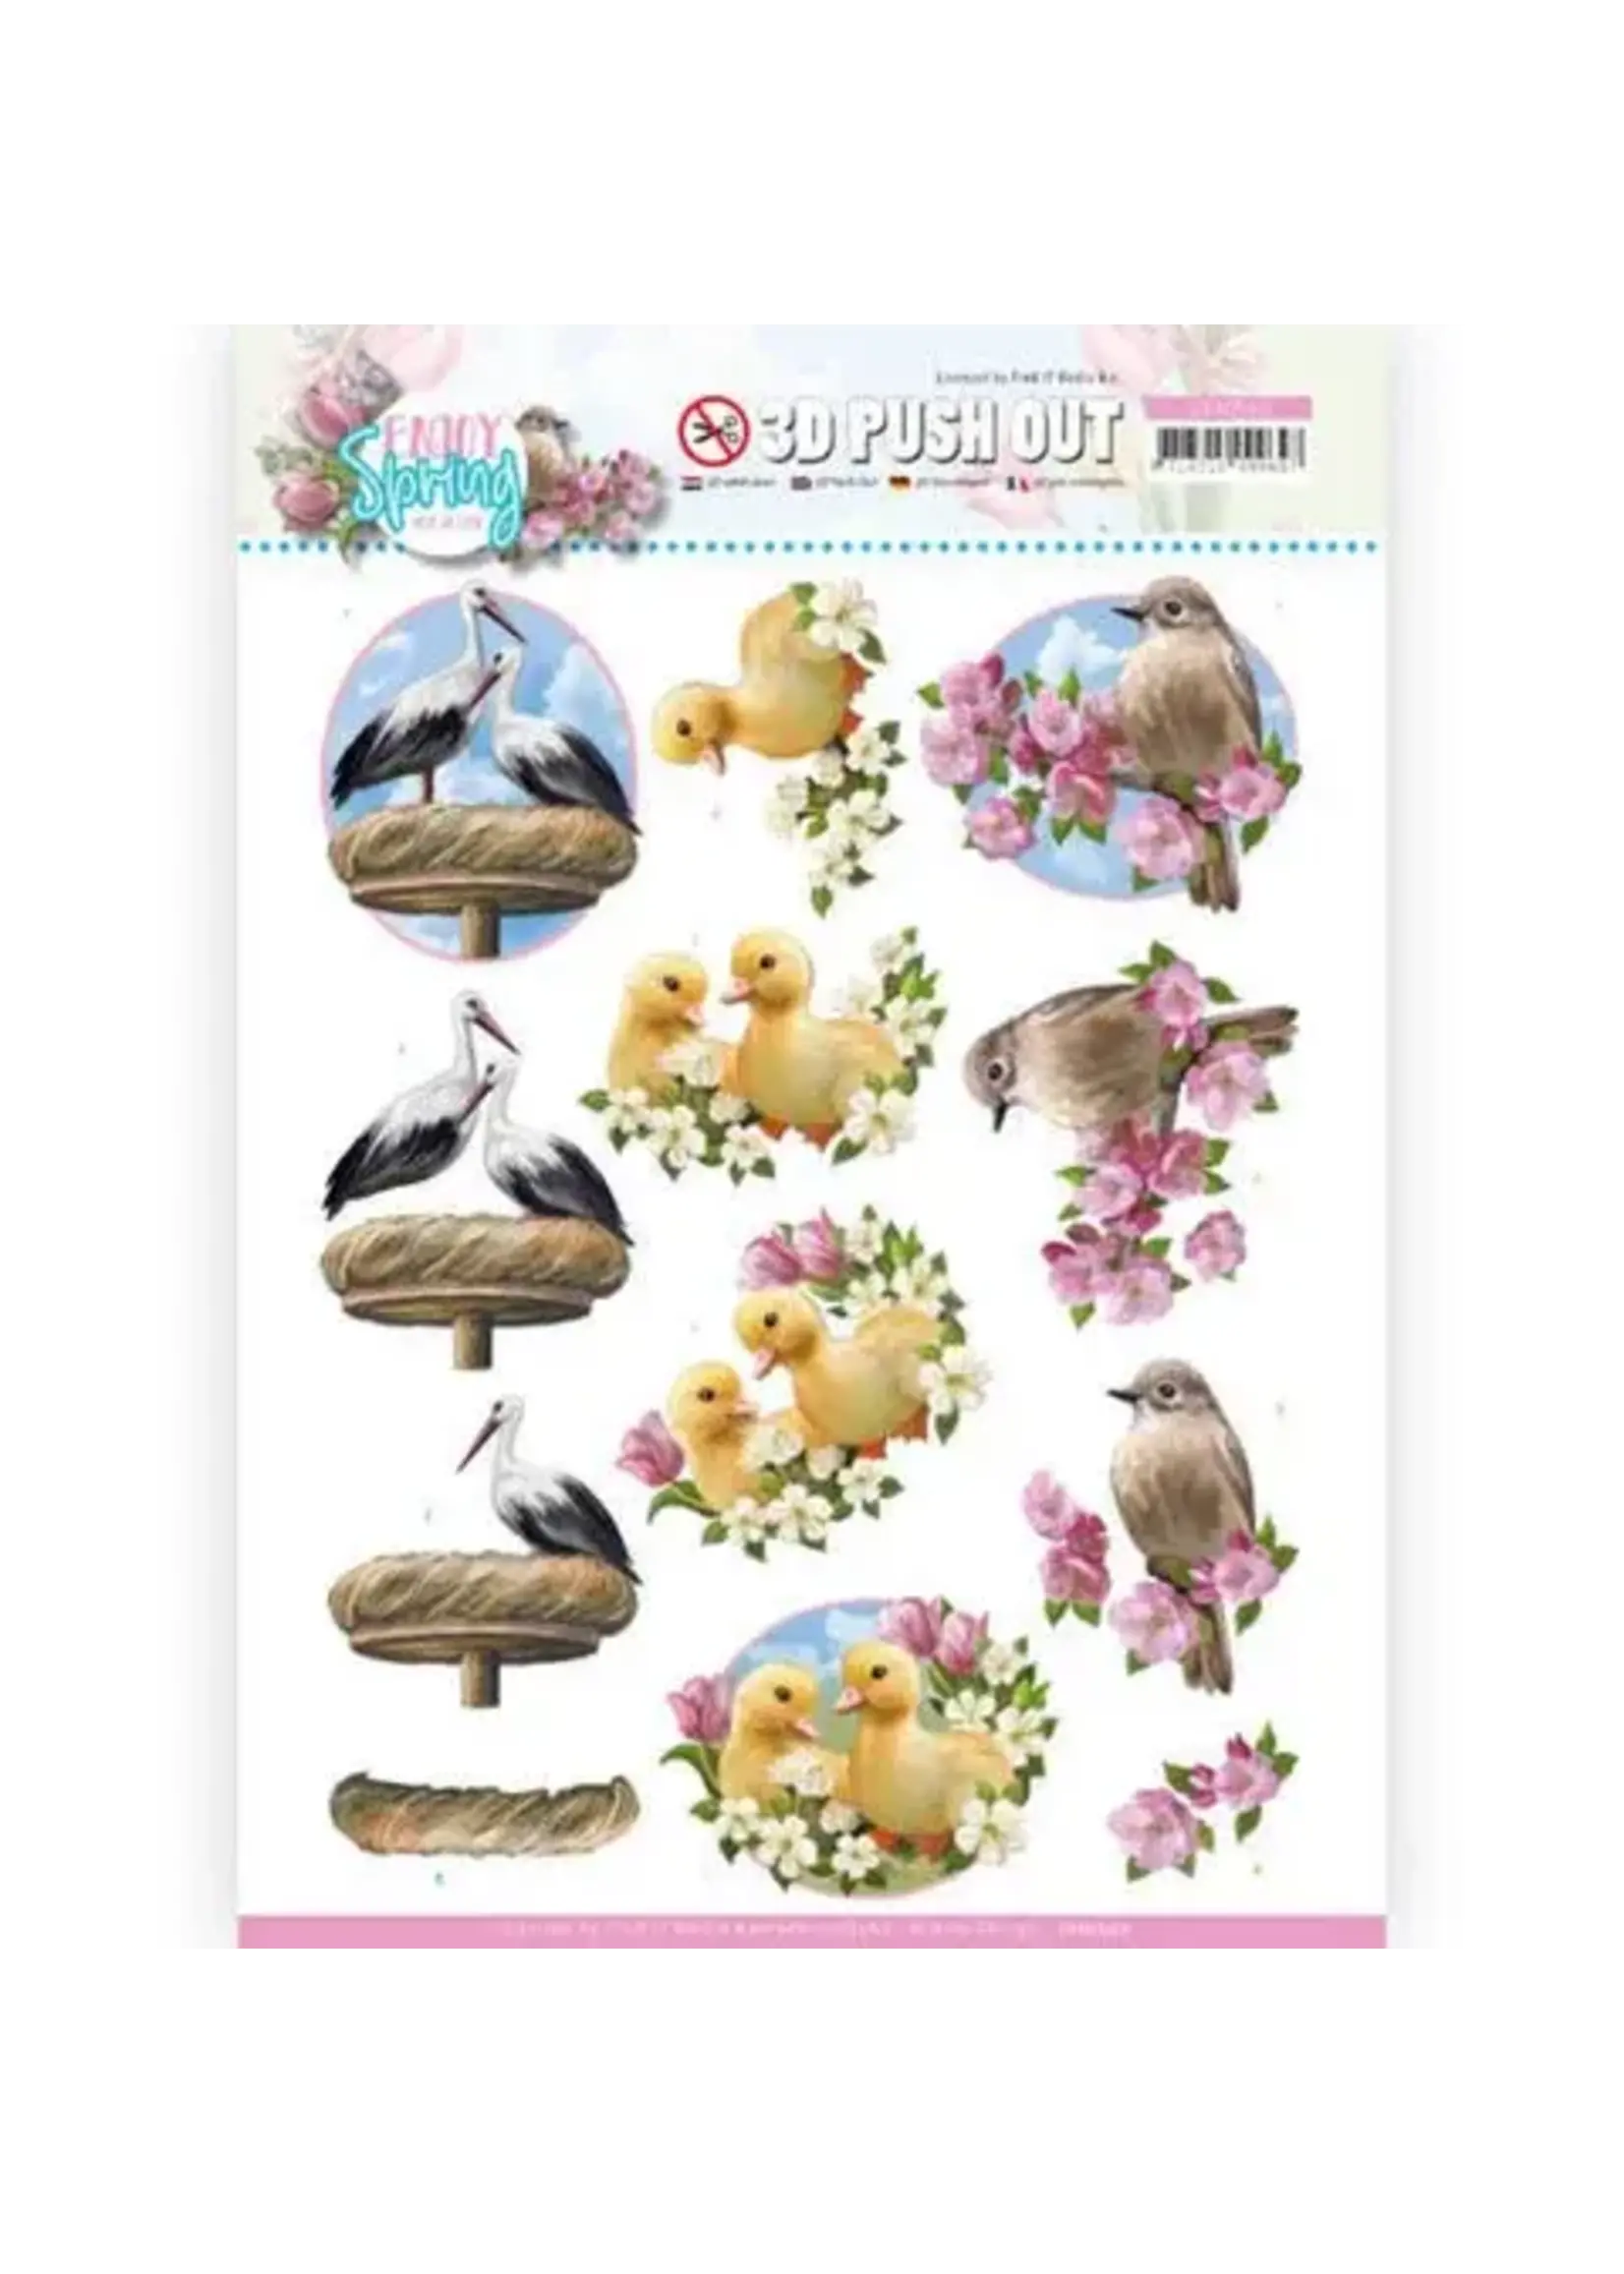 3D Push Out - Amy Design - Enjoy Spring - Birds SB10540